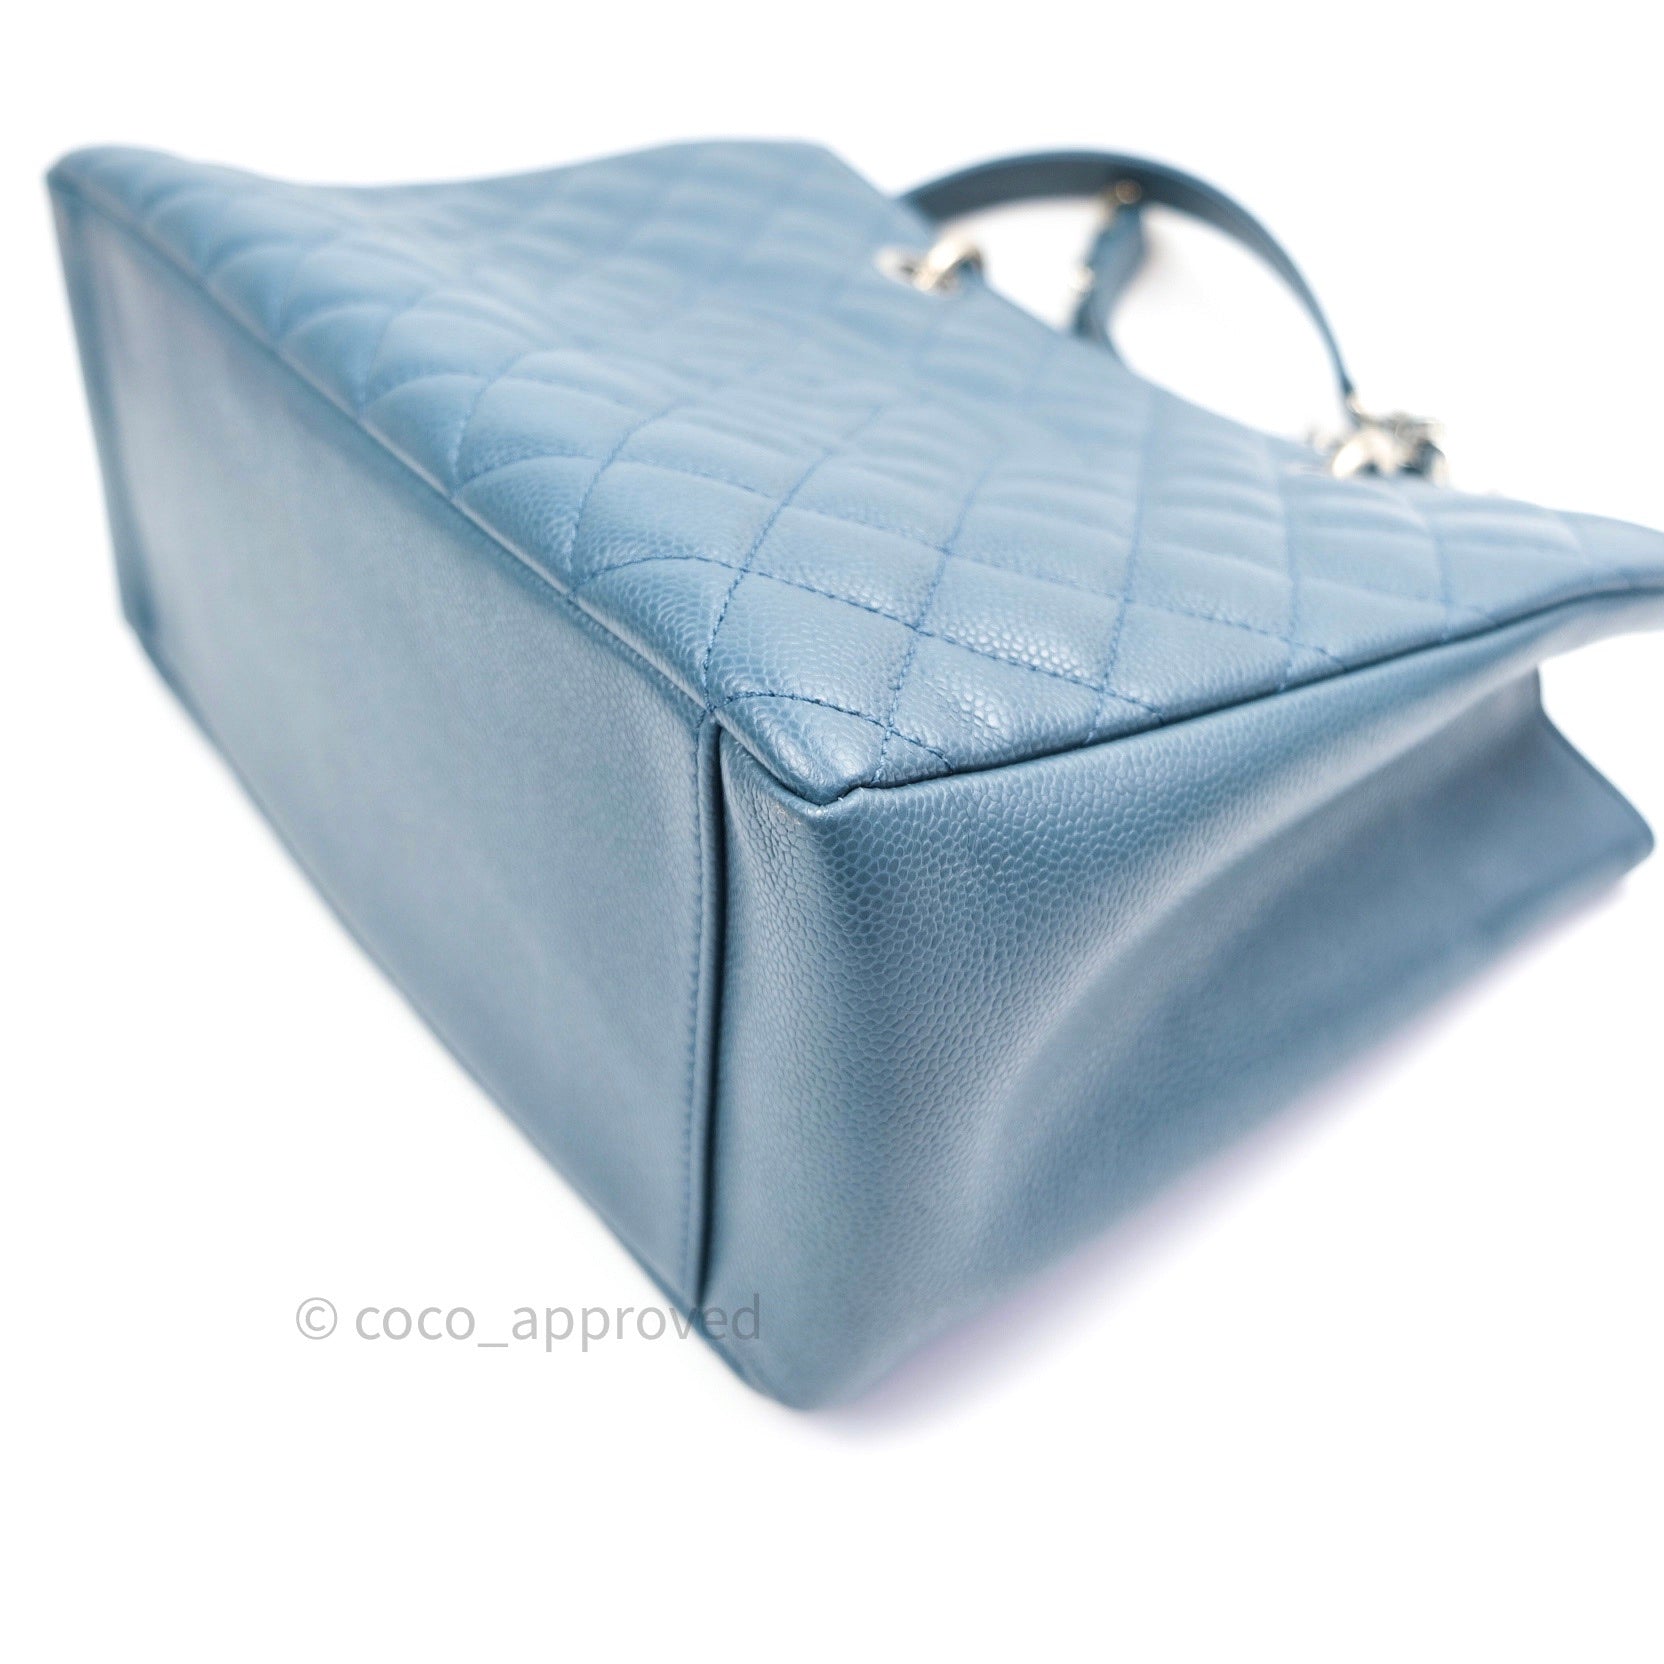 Chanel Classic Timeless Shopping Tote - Blue Totes, Handbags - CHA874654